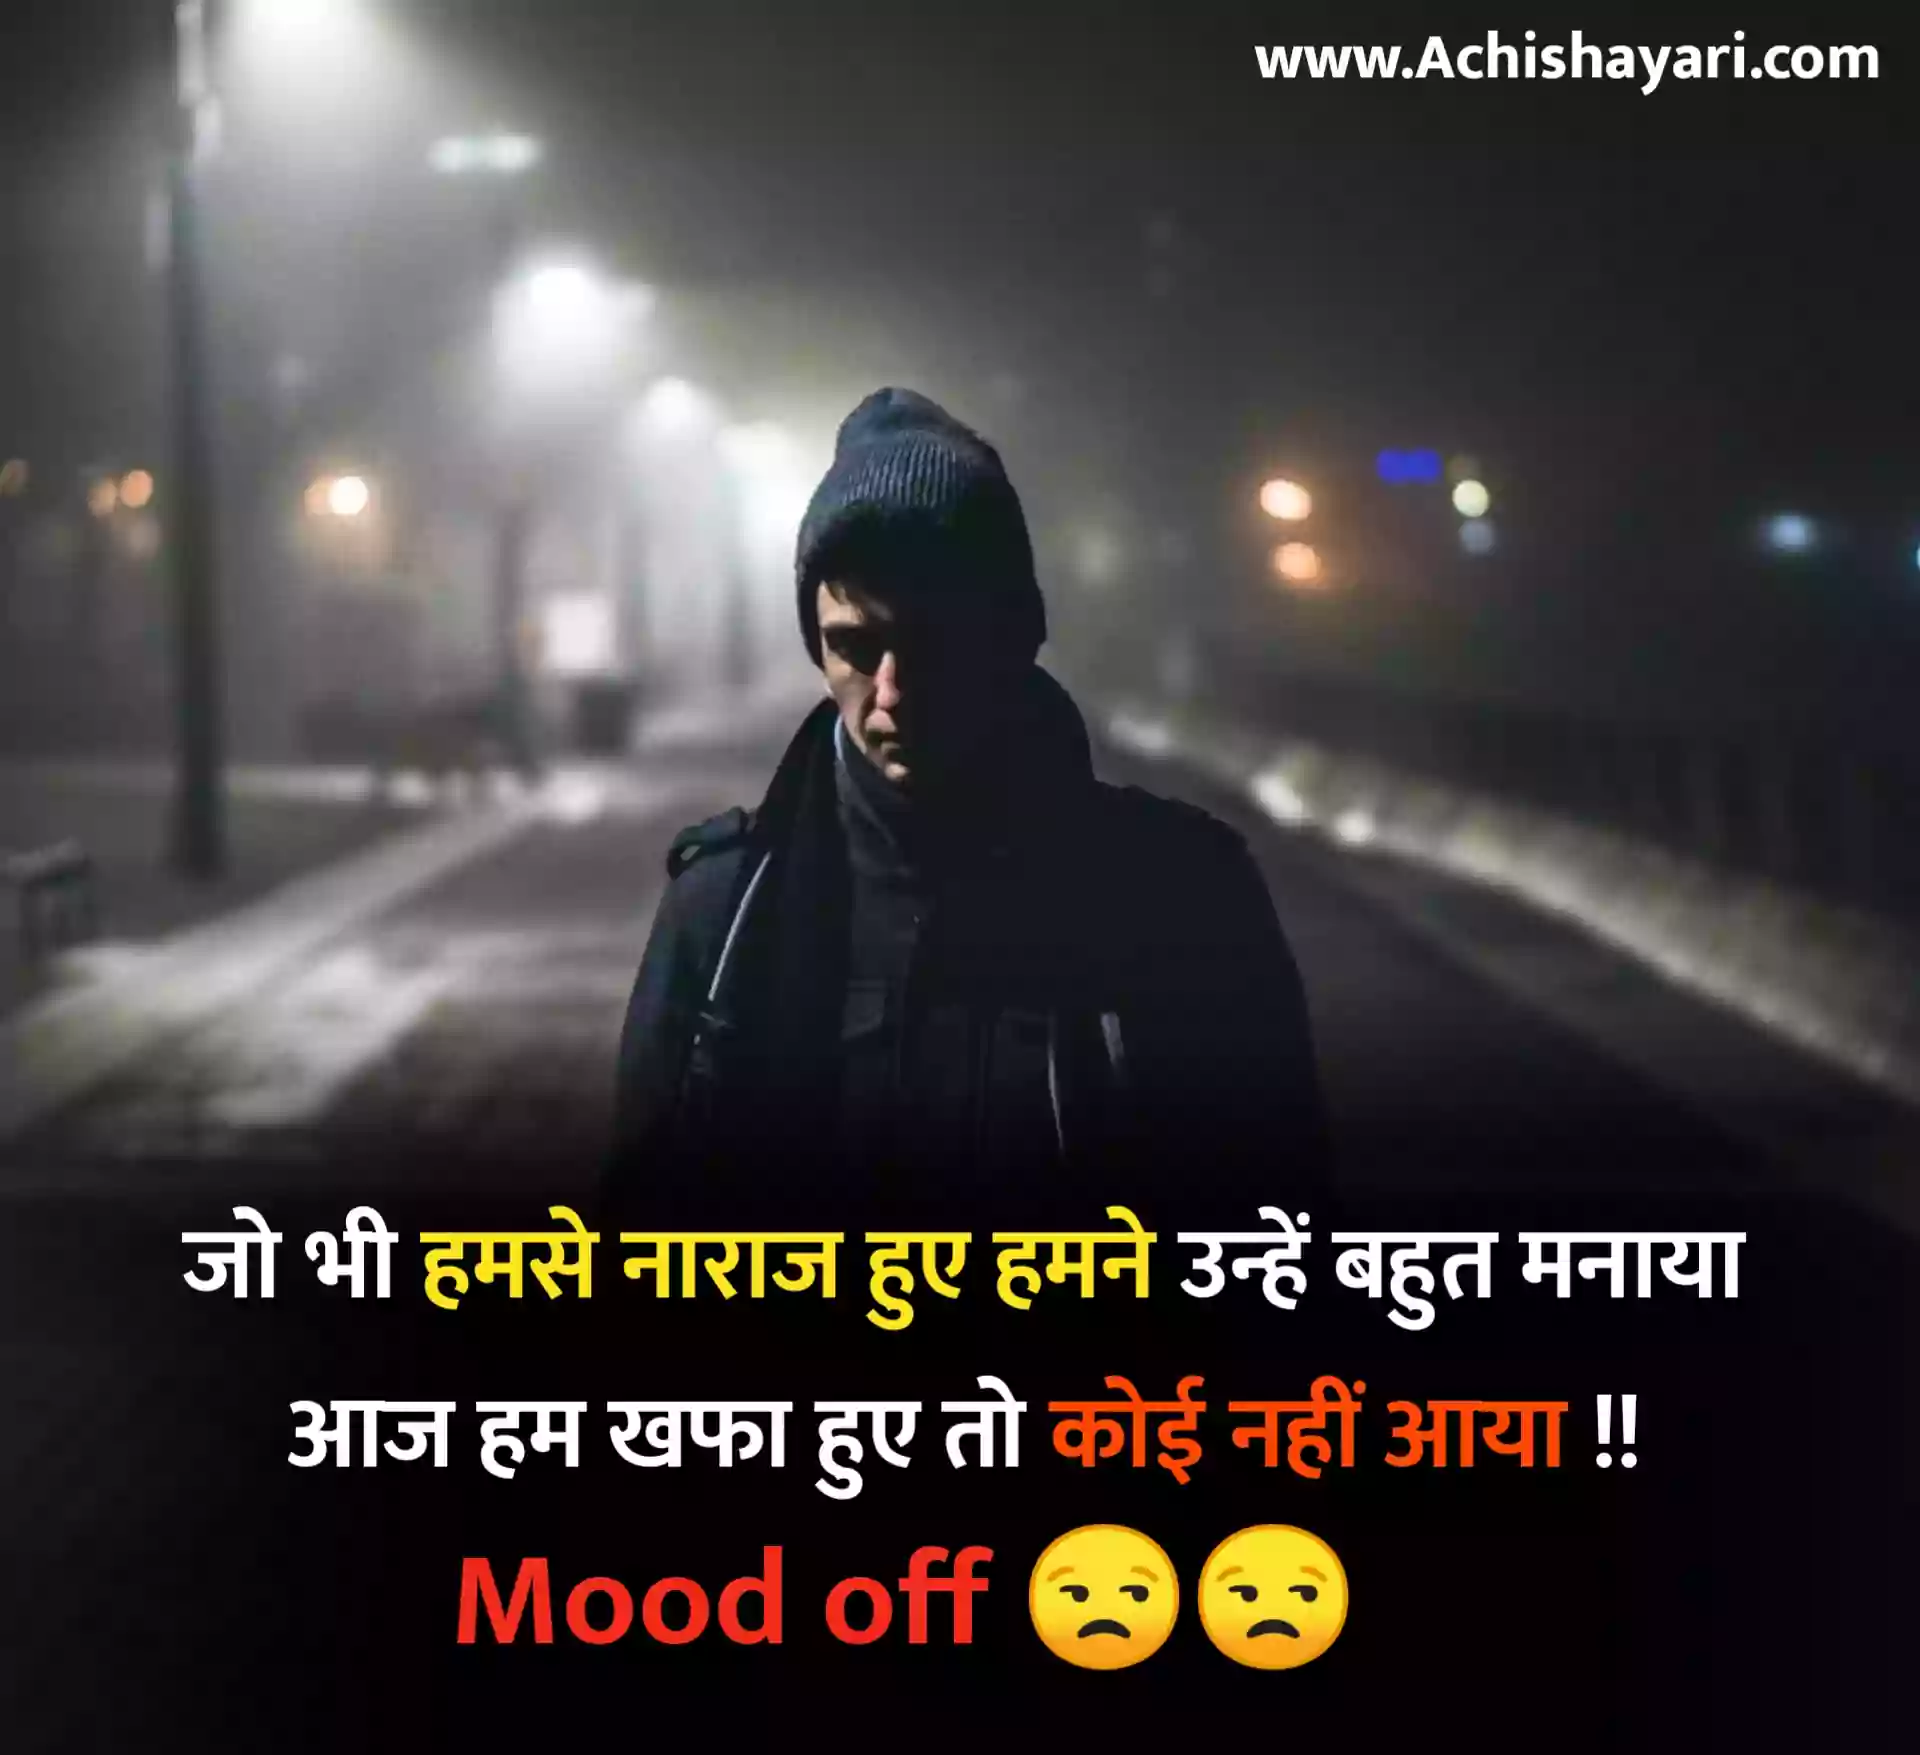 Mood off Status in Hindi Image